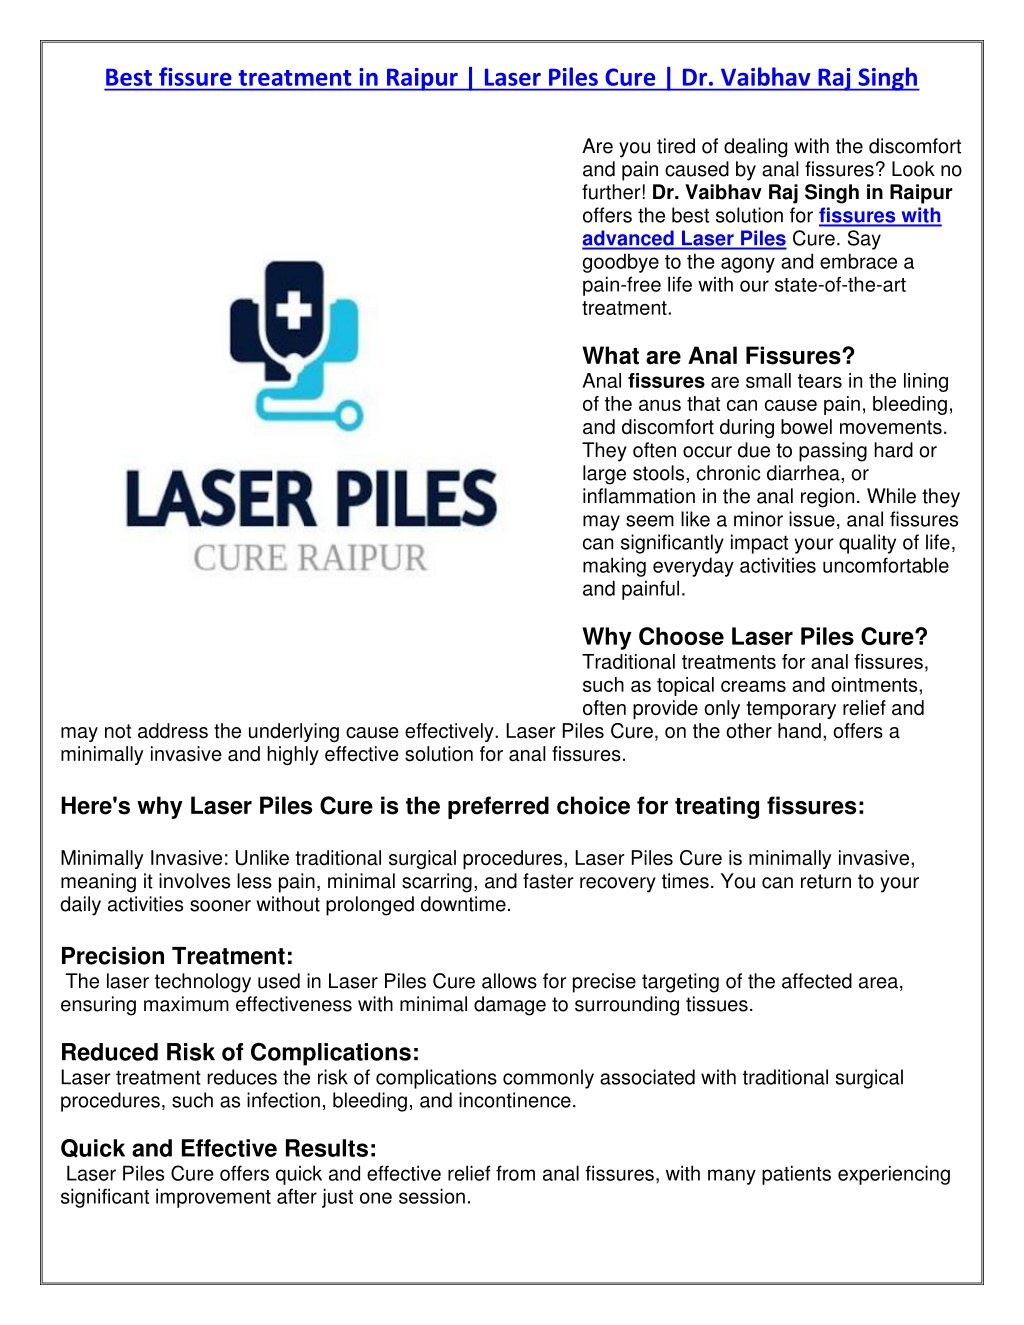 best fissure treatment in raipur laser piles cure l.w